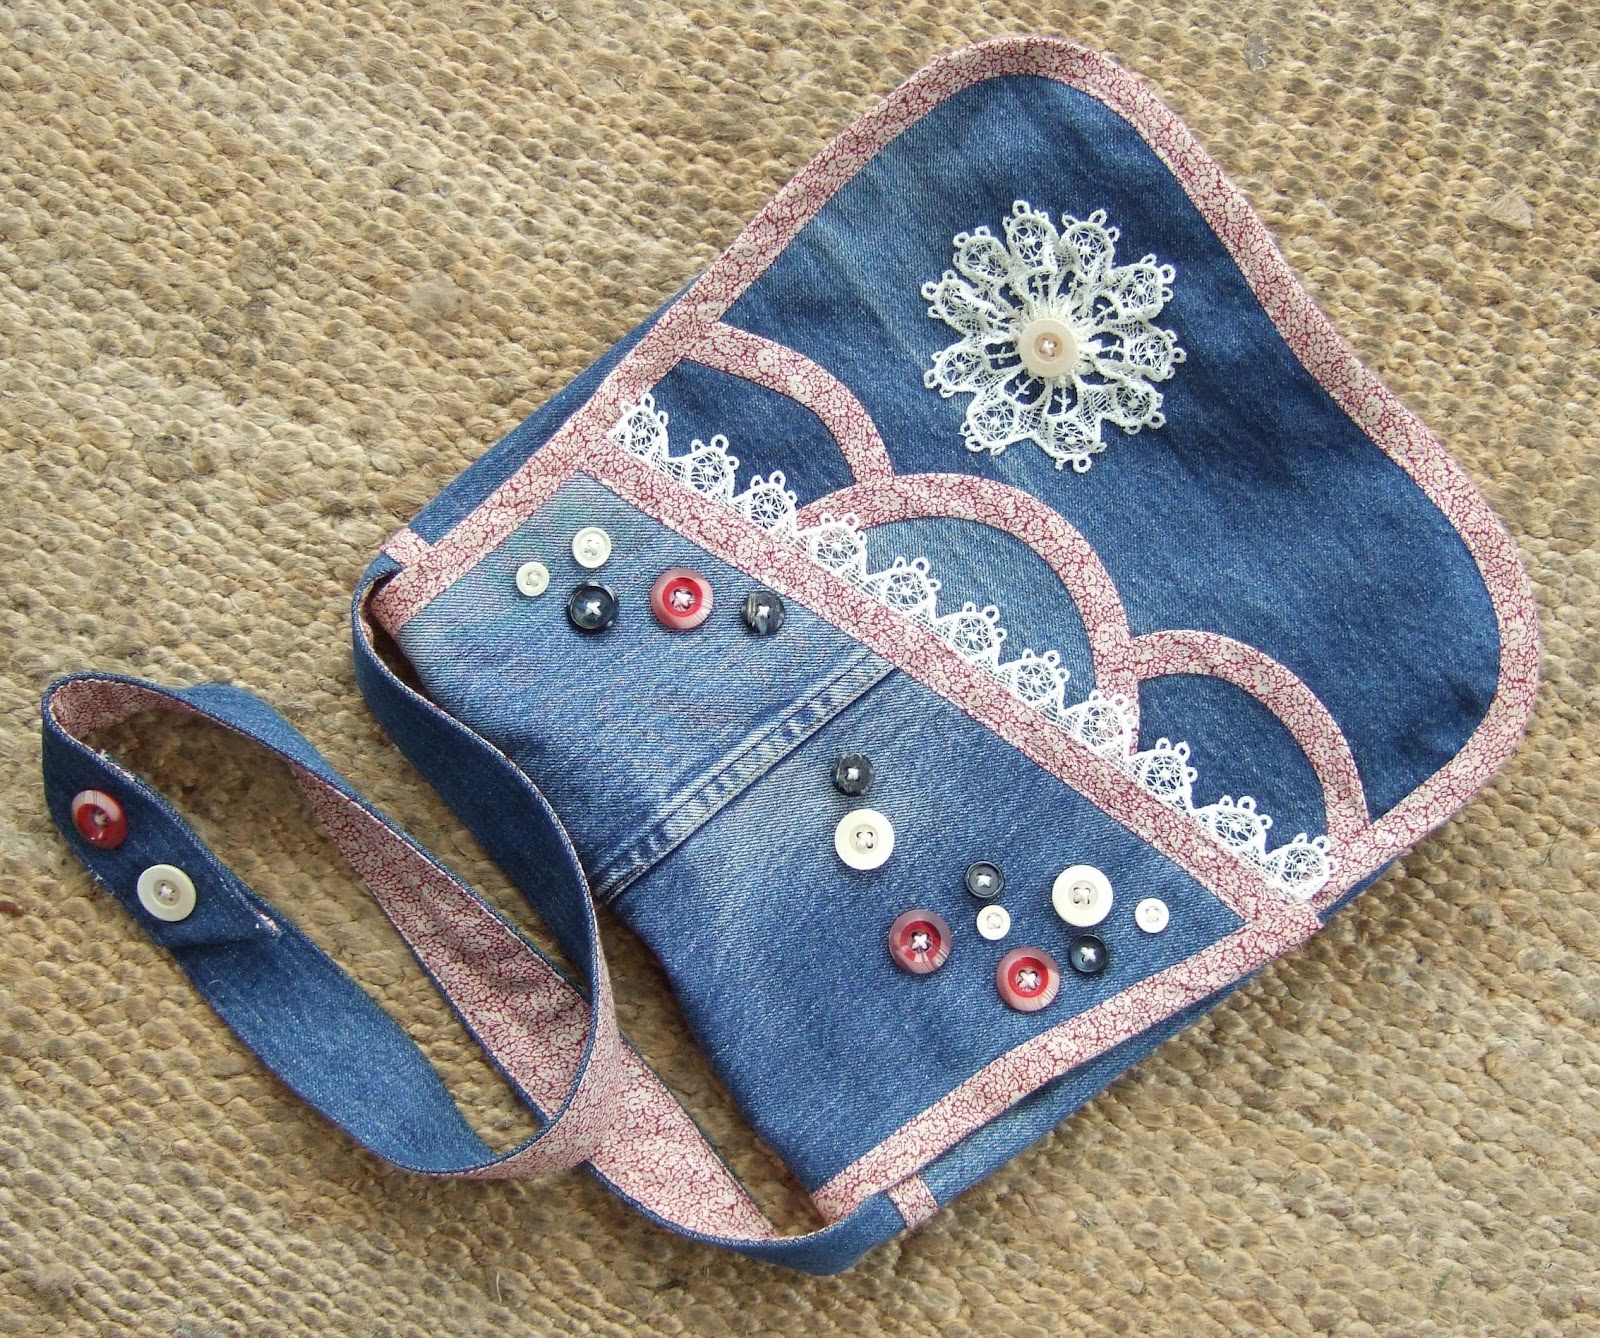 Unique Artisan Jewellery by Mouflon: My Handmade Bags